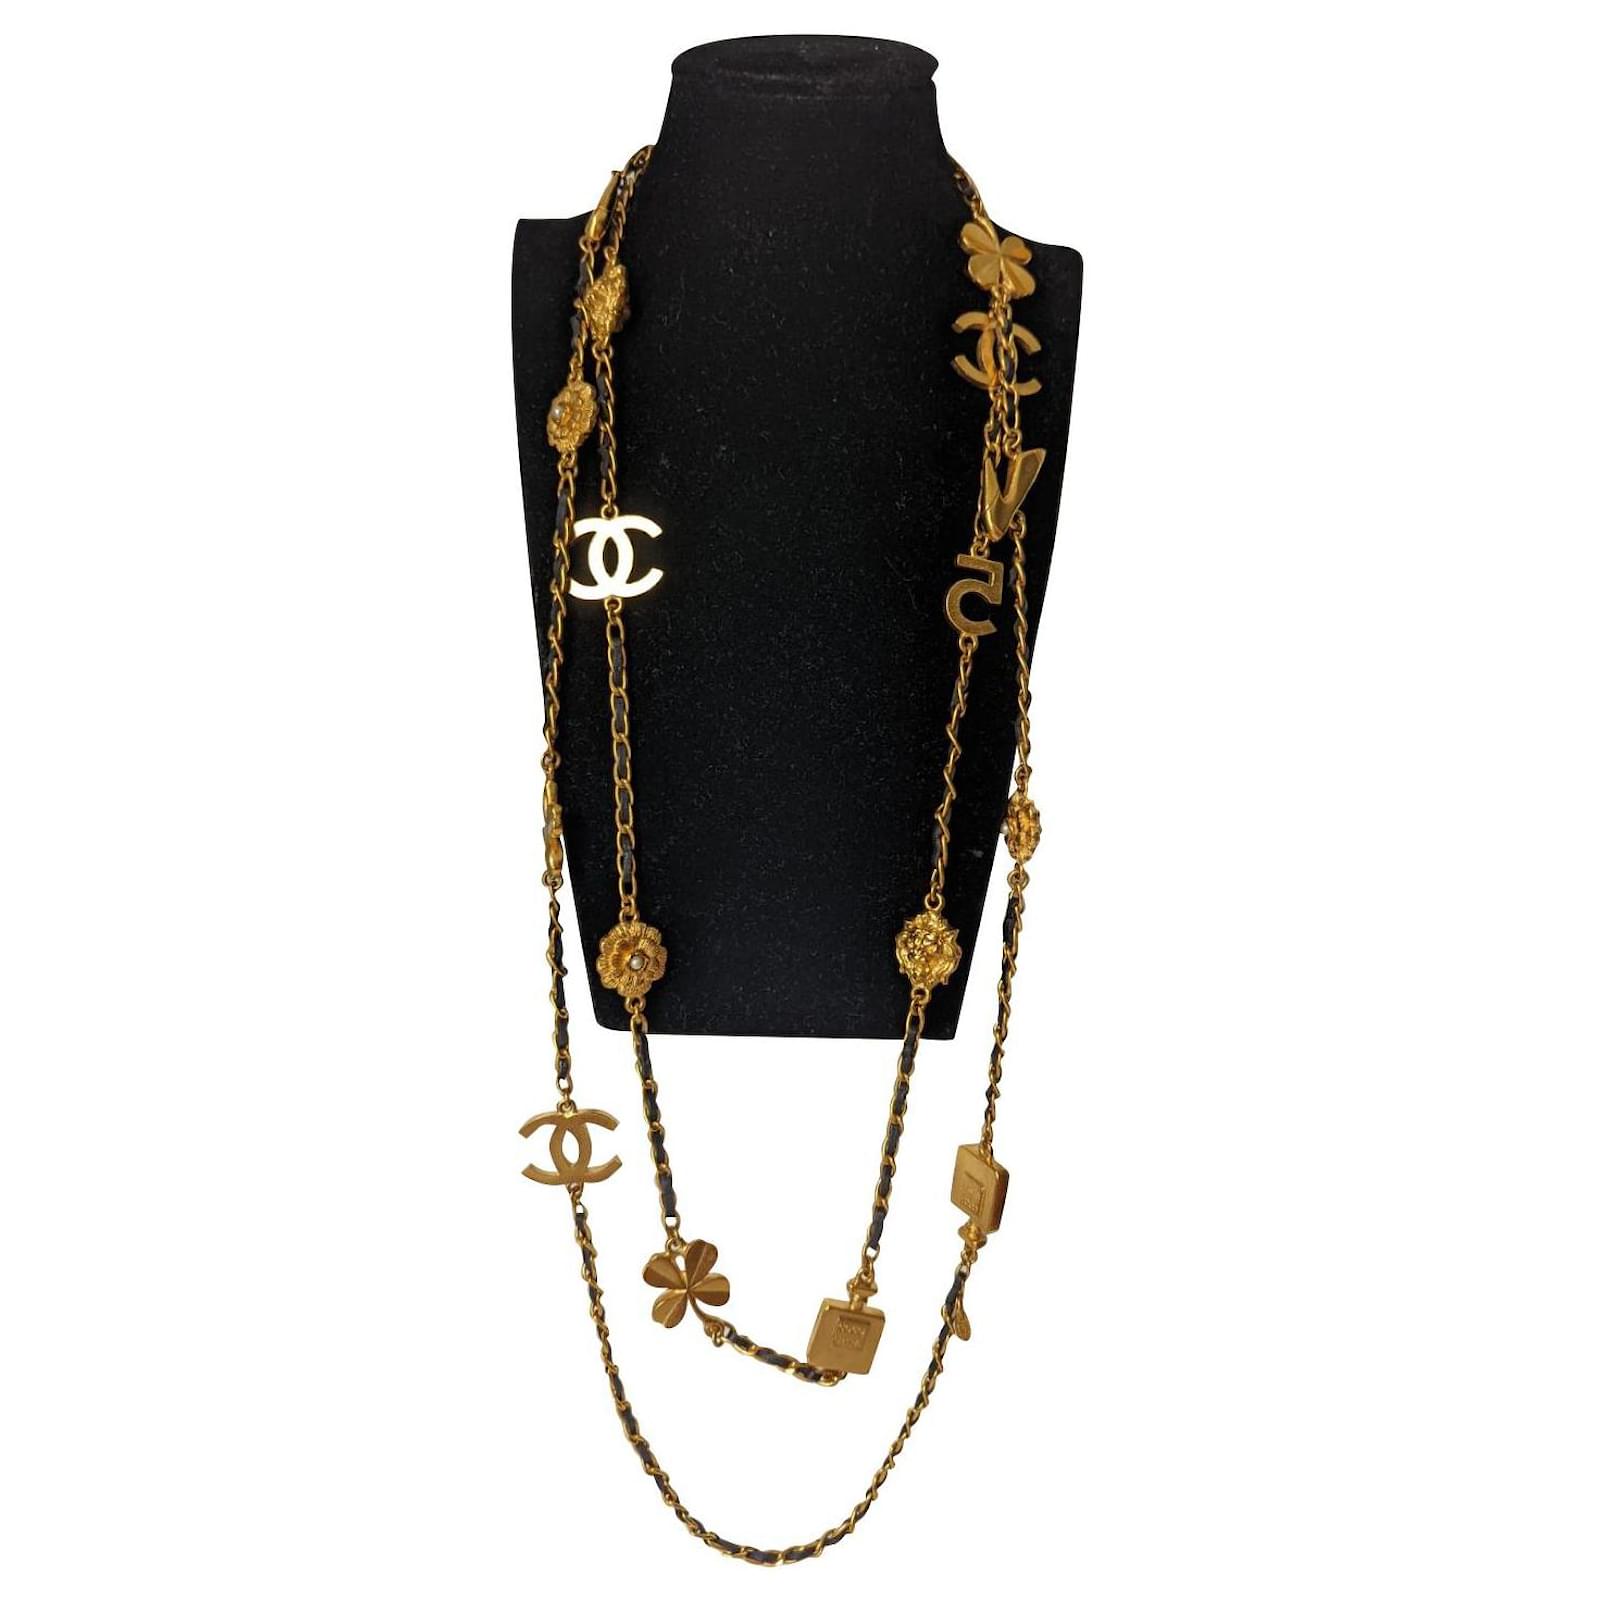 Chanel Gold CC Clasp Chain Surround Pin